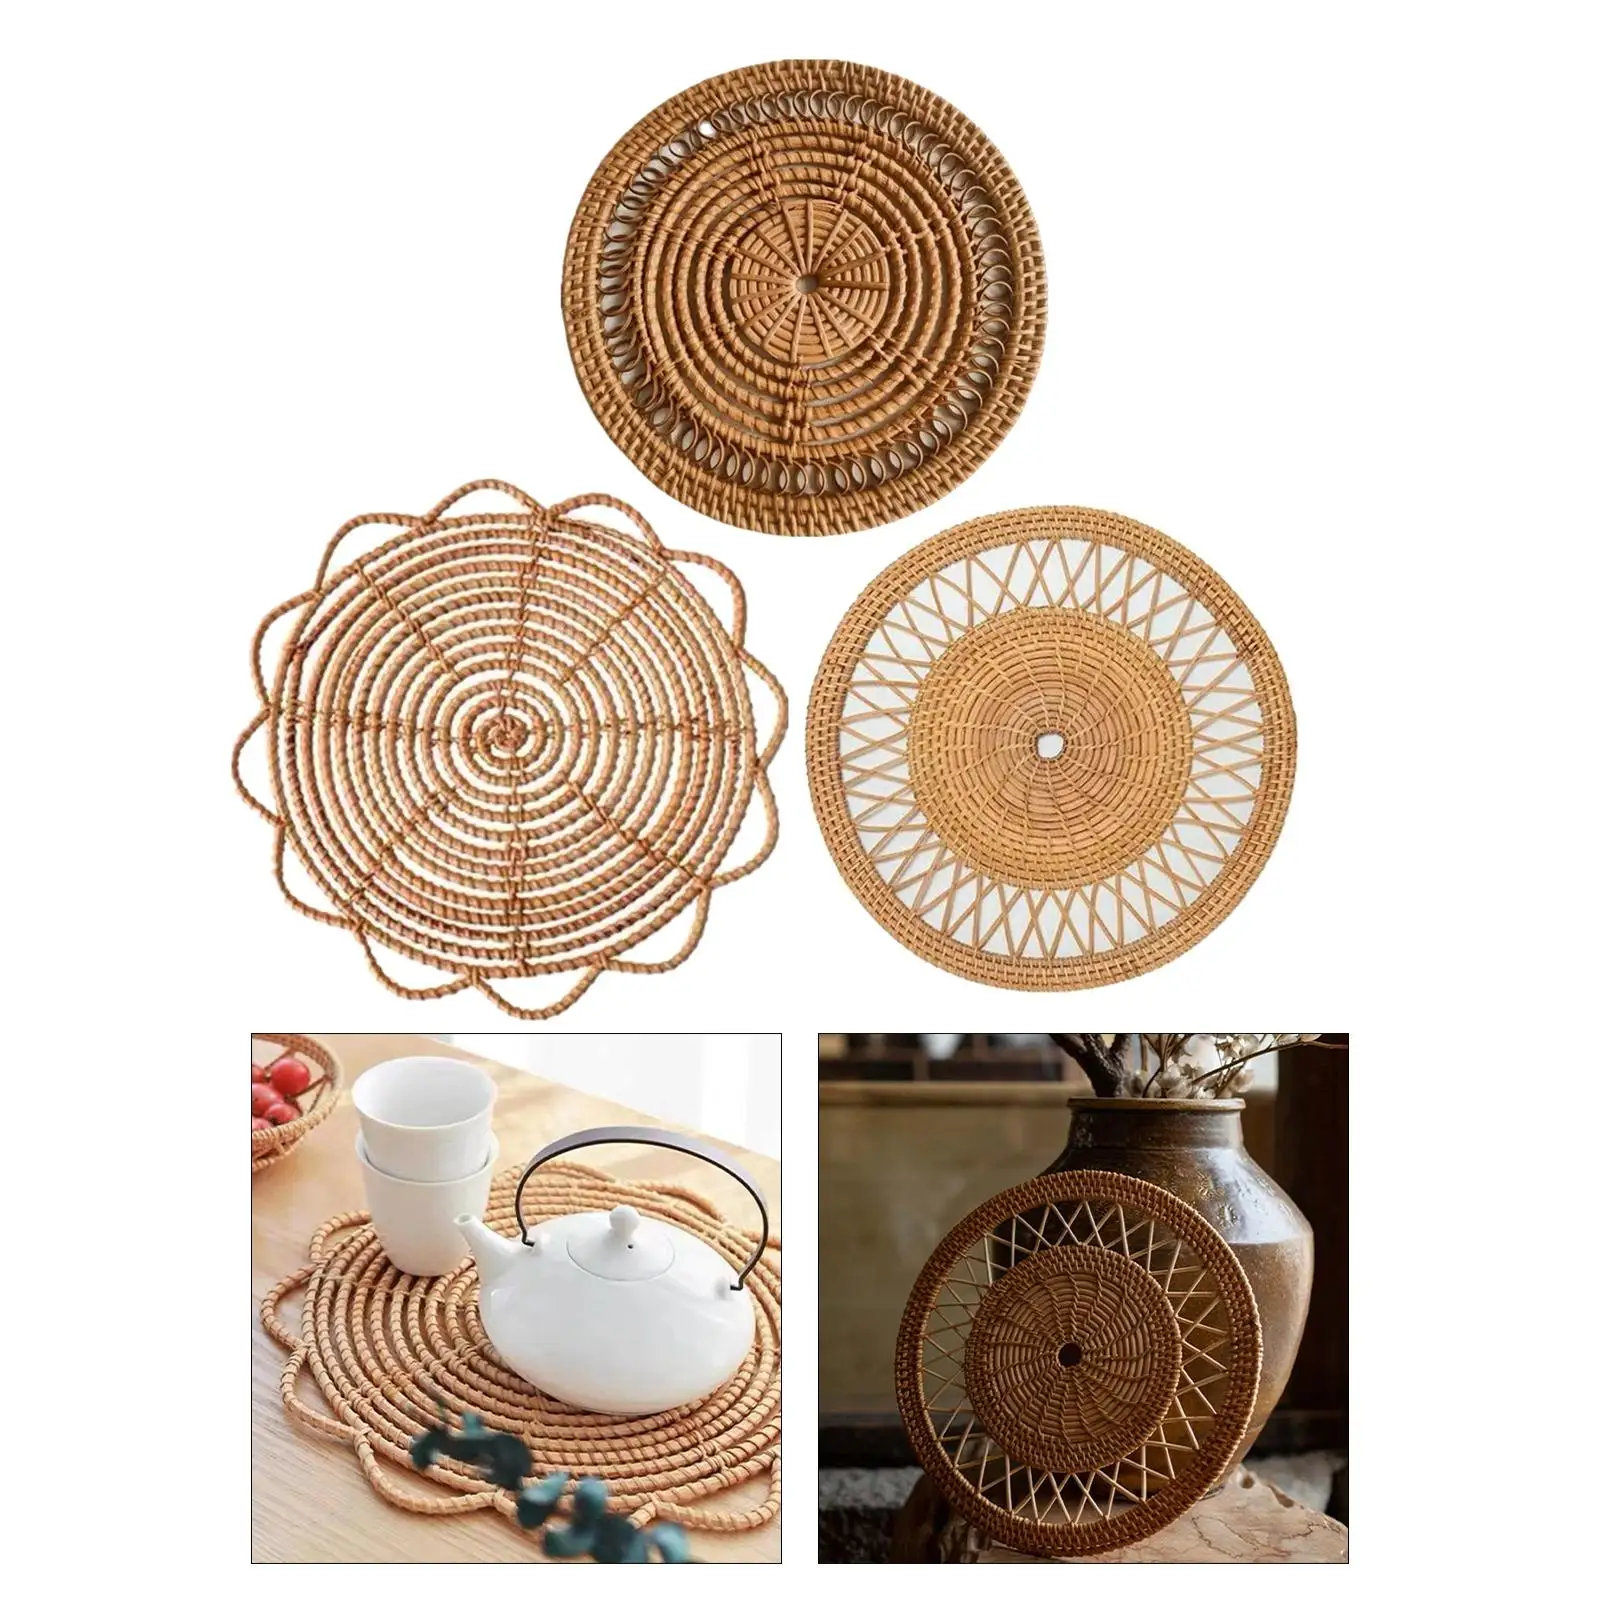 Handwoven Wall Basket Decor Round Boho Decor Rattan for Living Room Bed Room